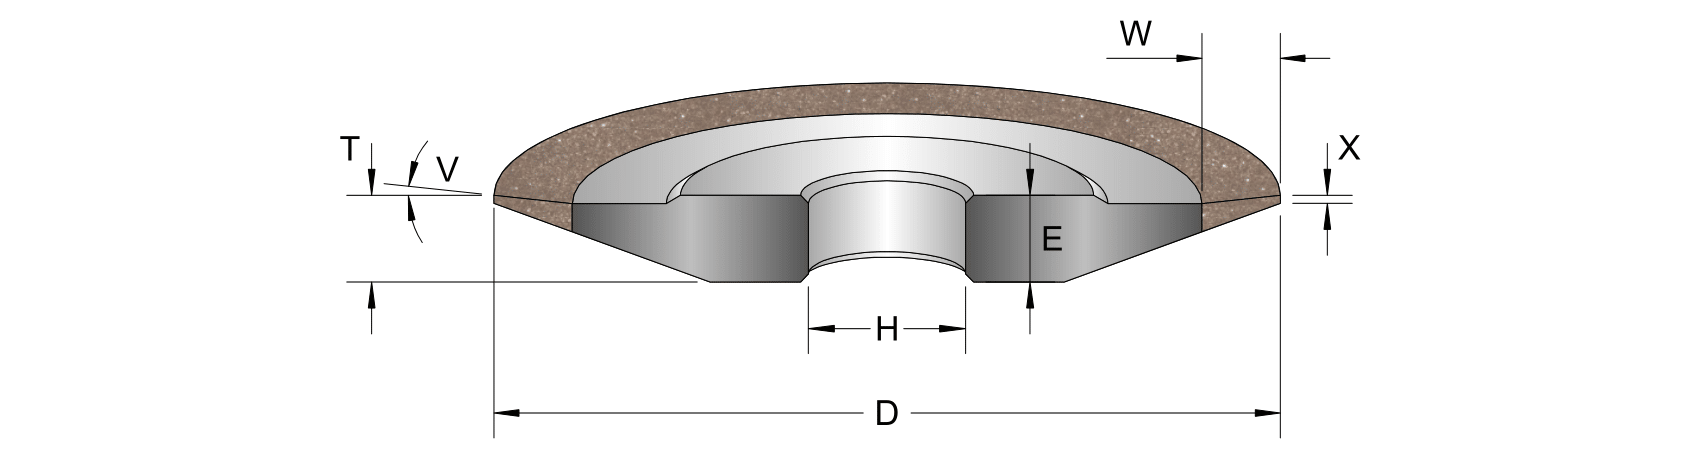 carbide grinding wheels